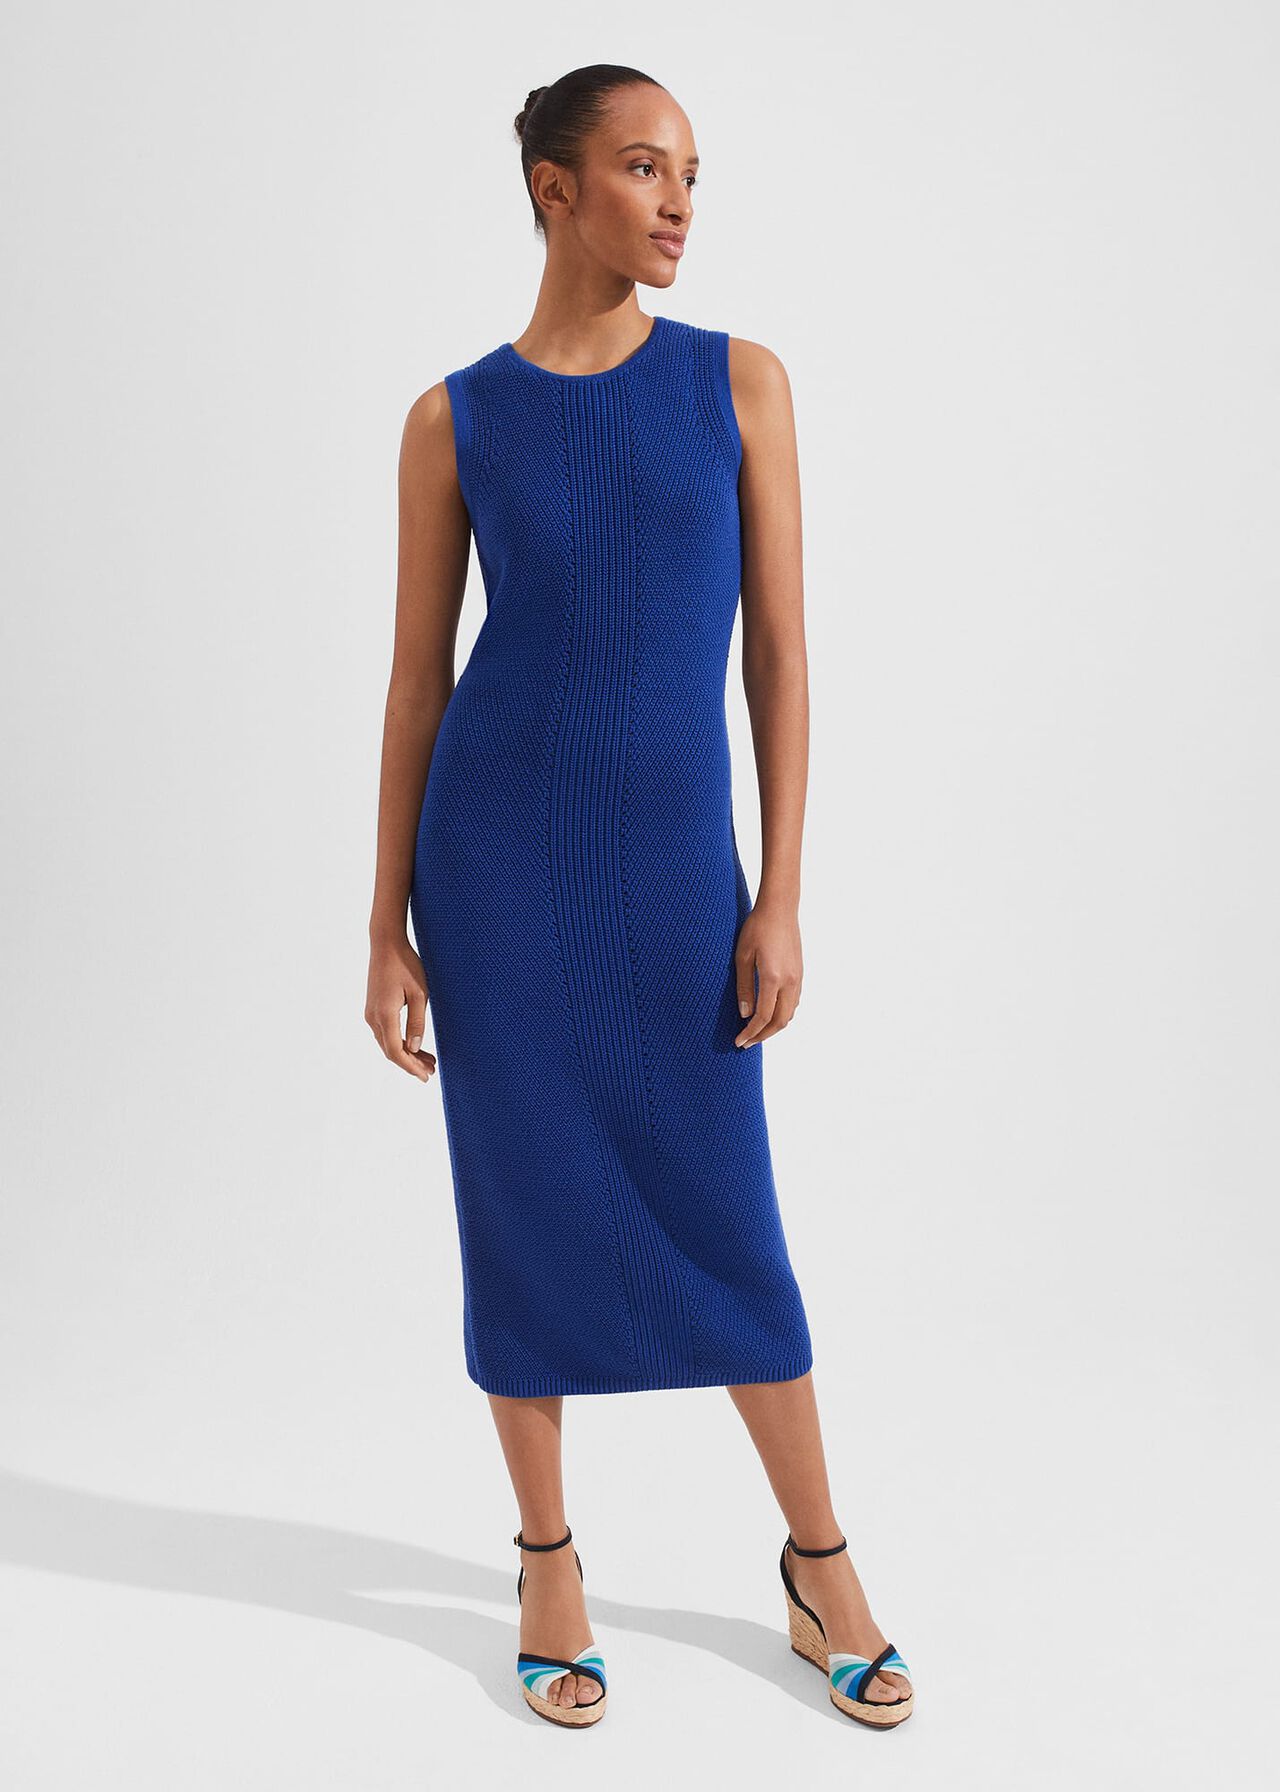 Elea Knitted Dress, Cobalt Blue, hi-res